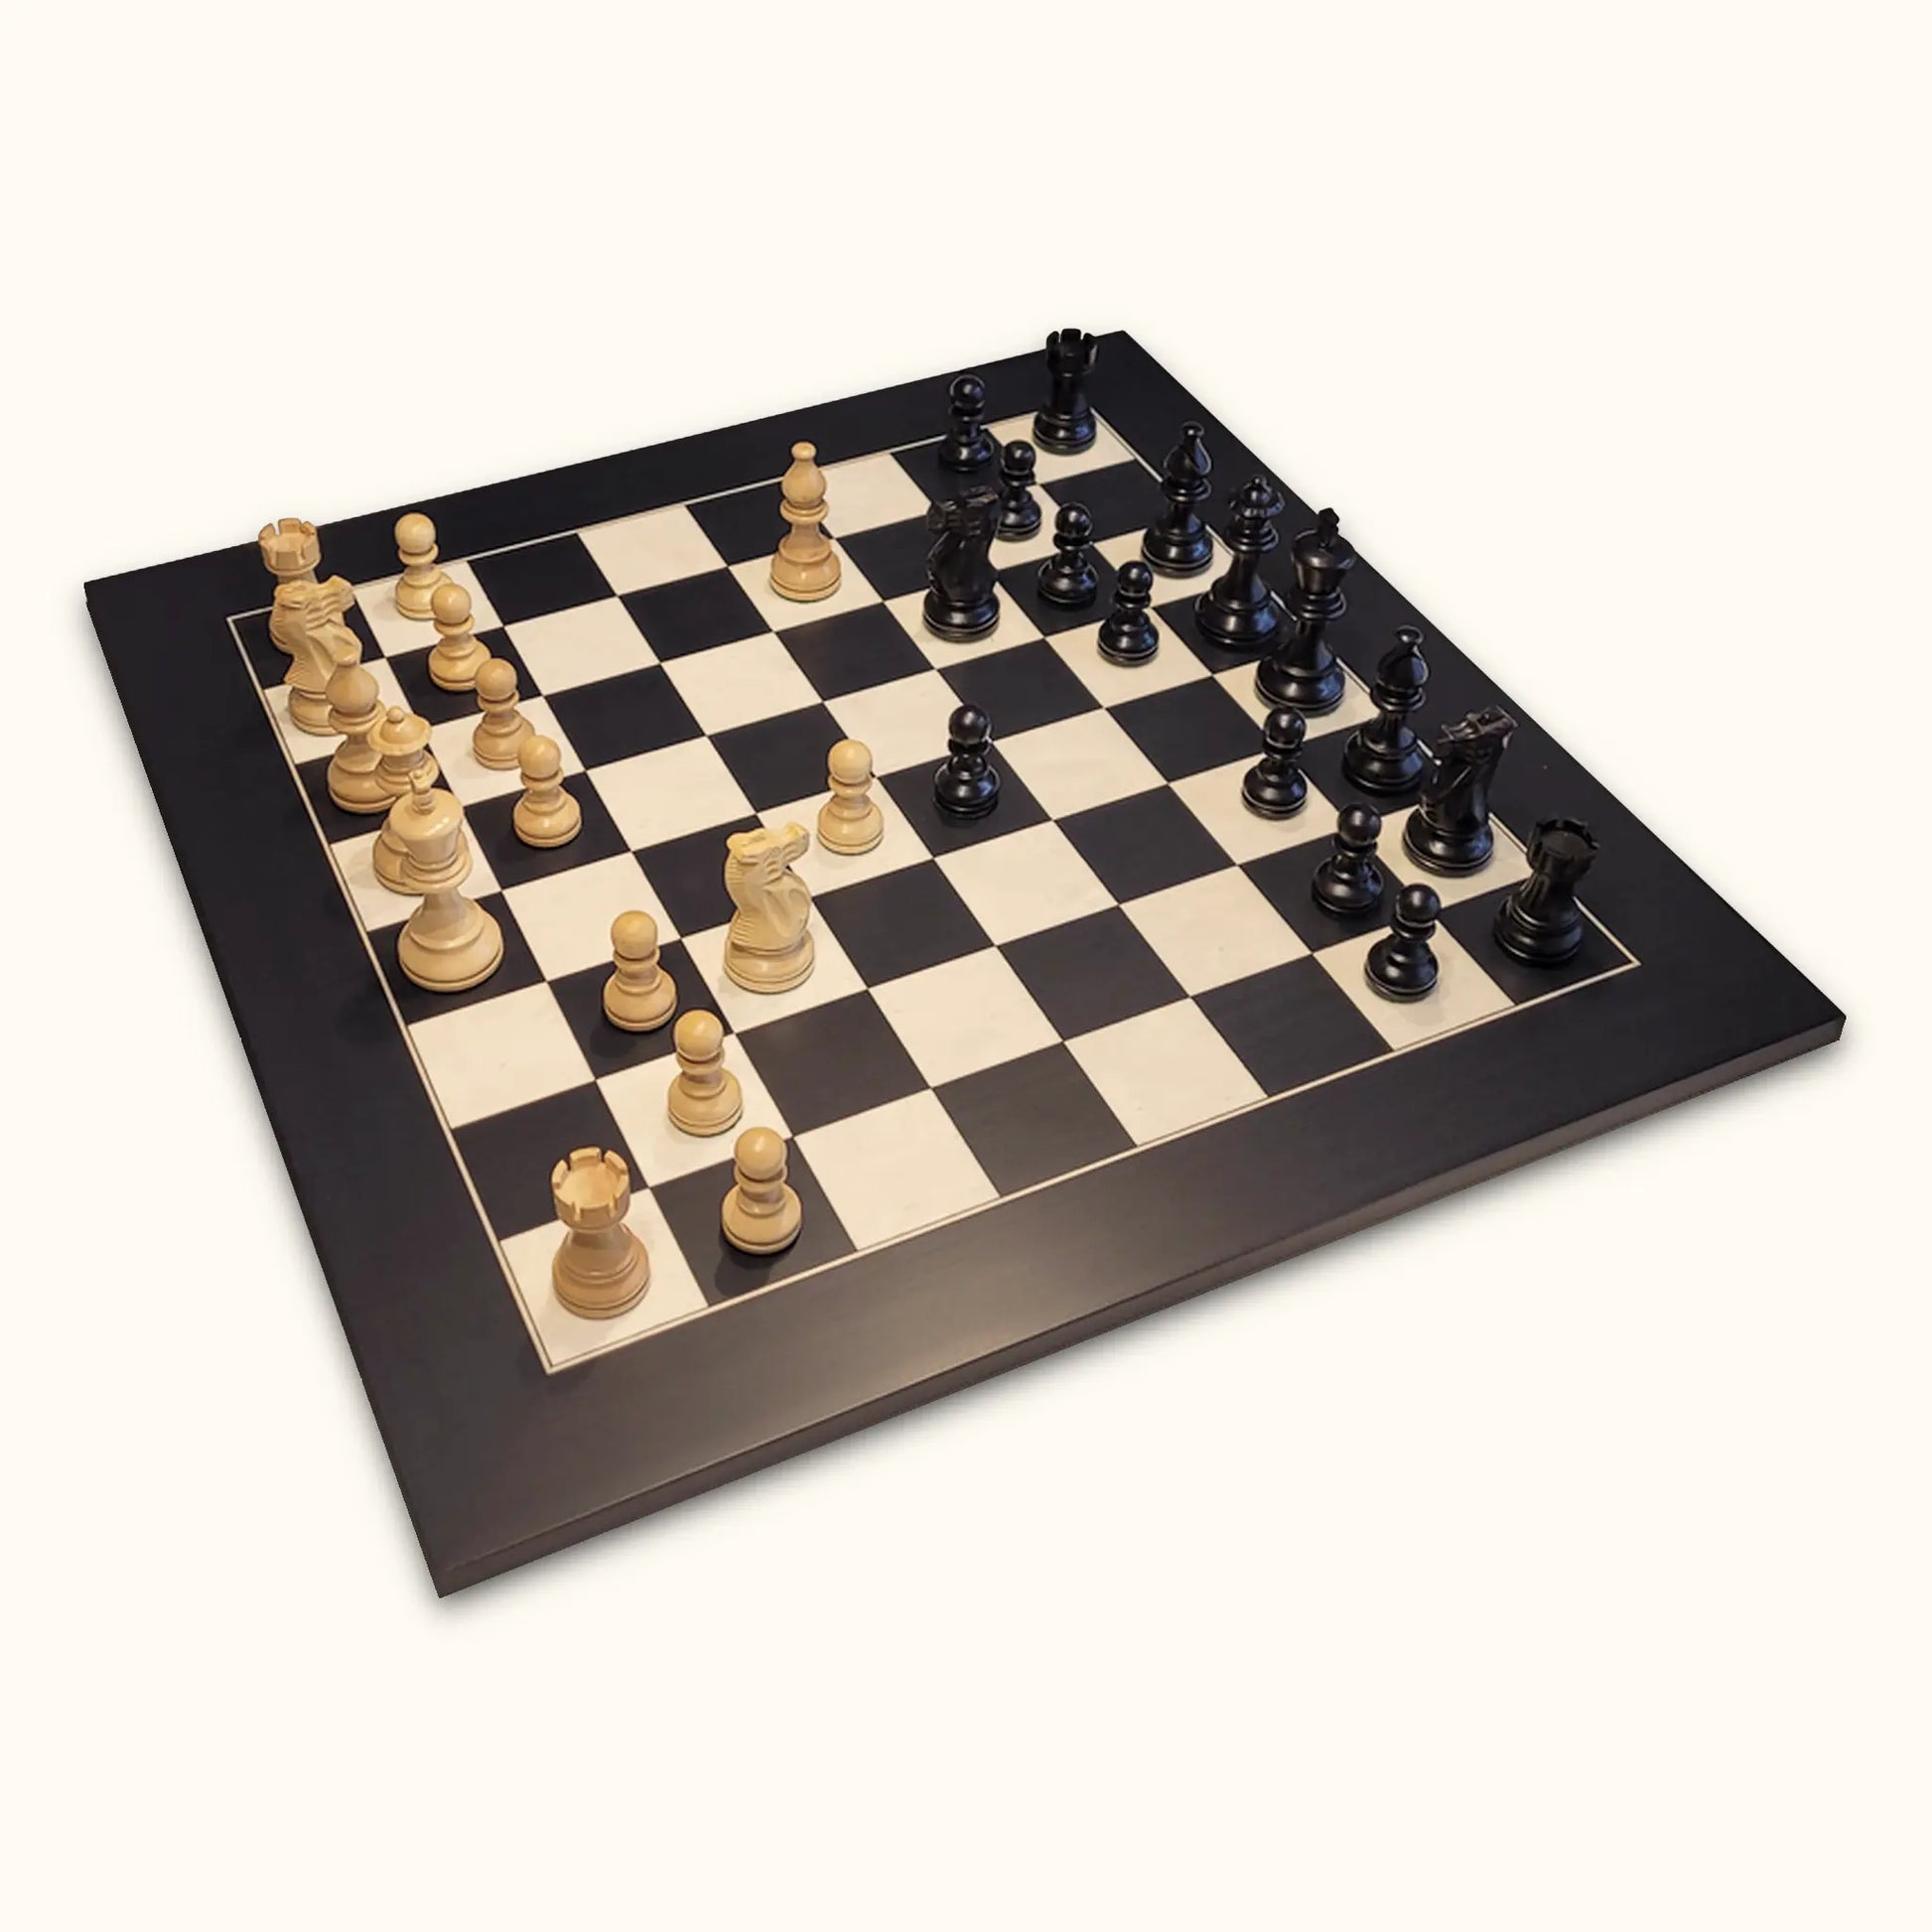 Chess pieces American Staunton ebonized on black deluxe chessboard diagonal